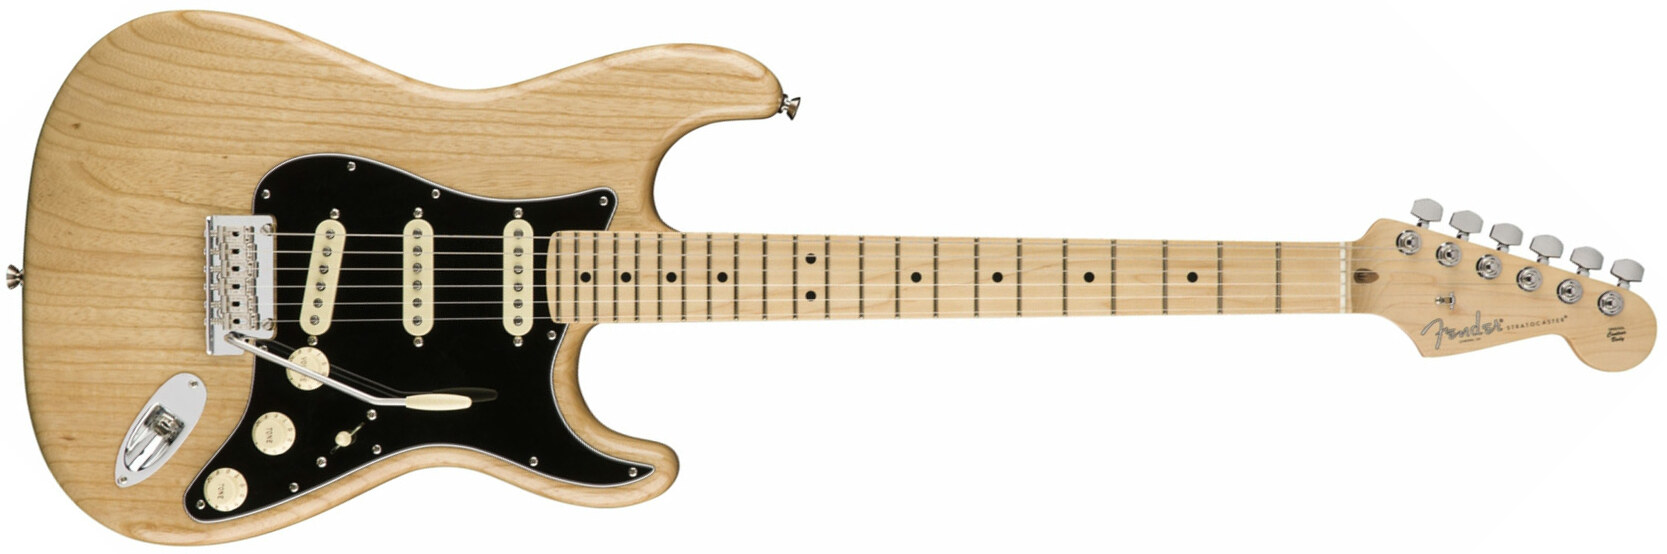 Fender Strat American Professional 3s Usa Mn - Natural - Guitarra eléctrica con forma de str. - Main picture